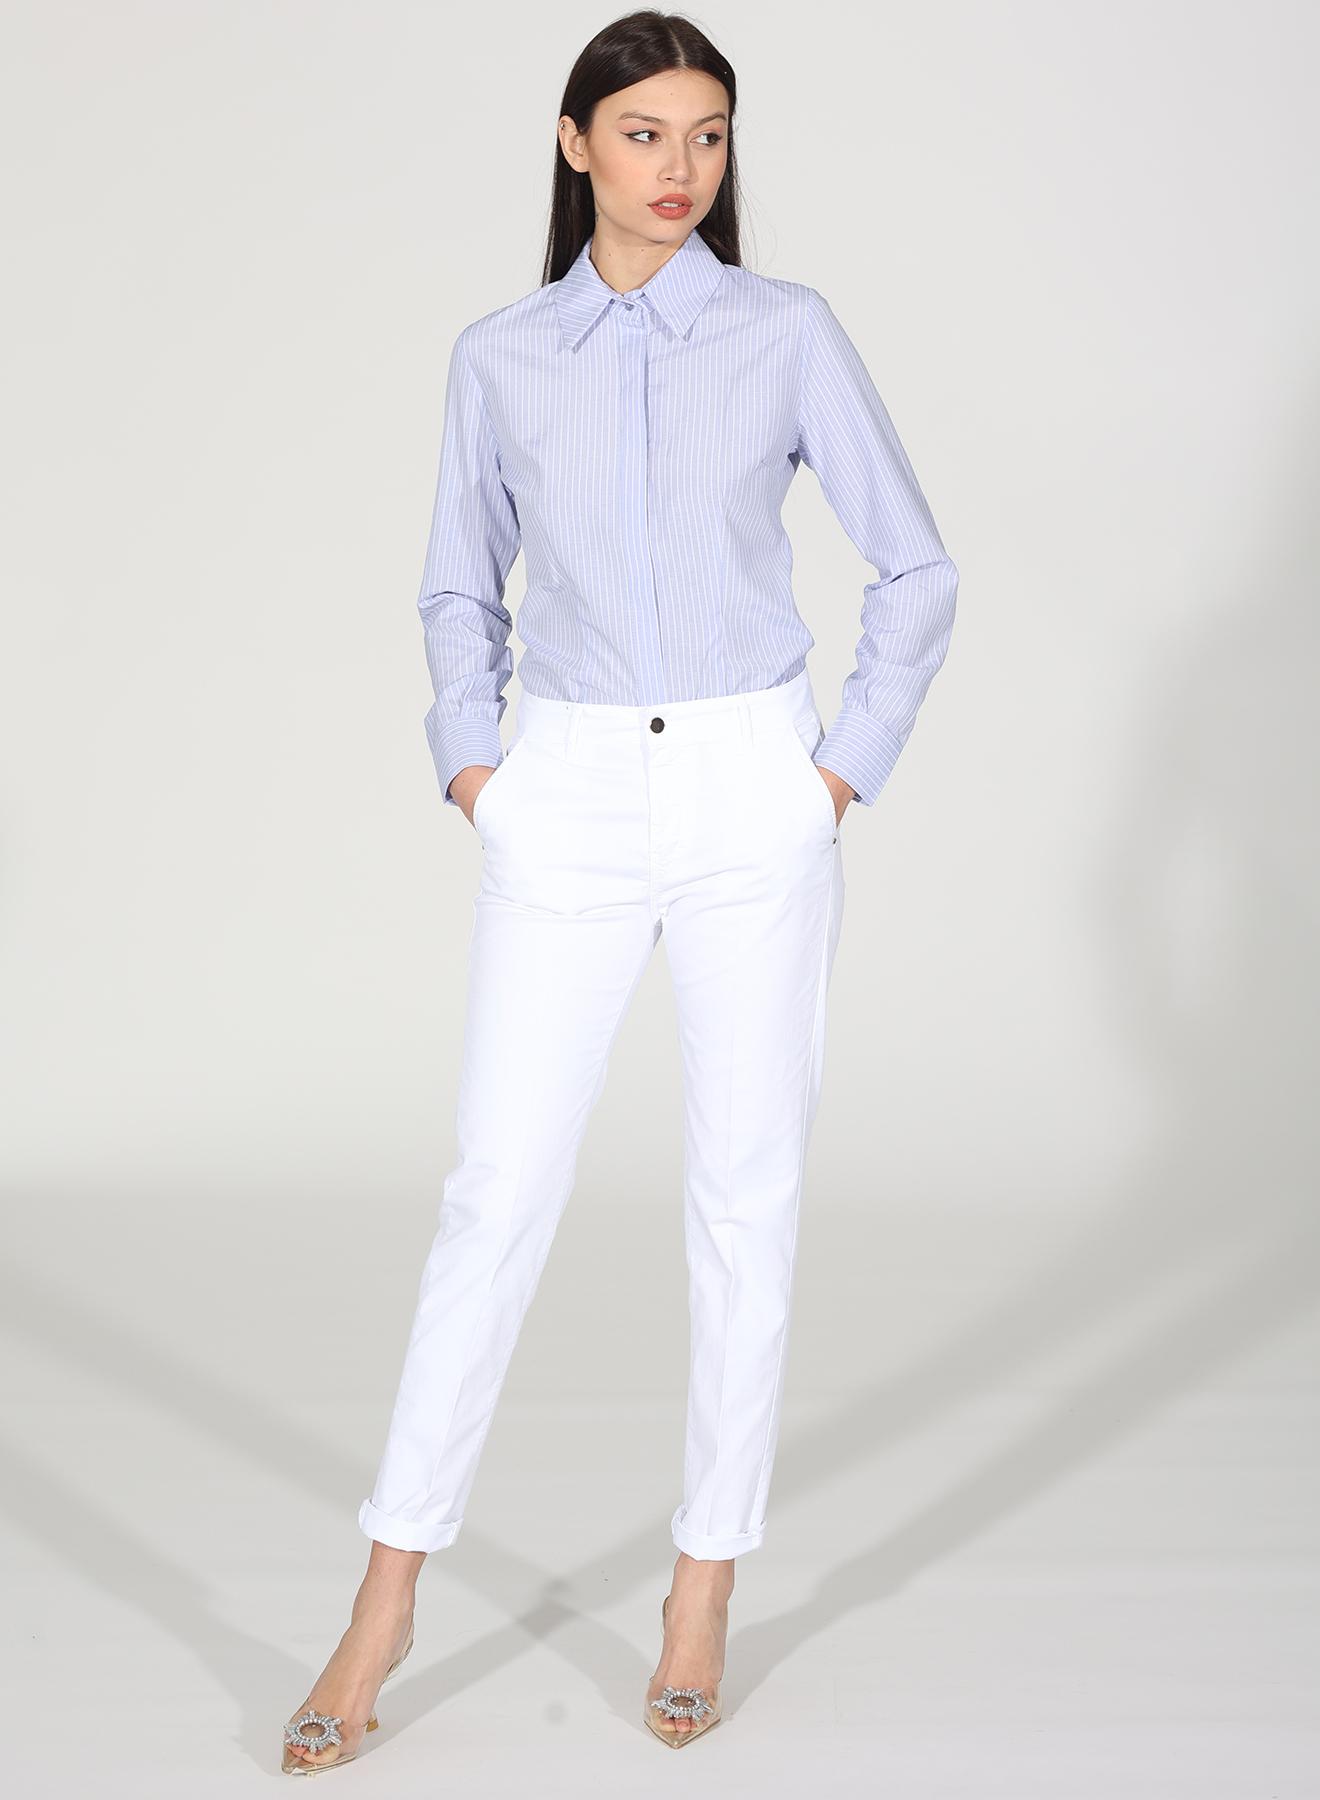 Light Blue-White Shirt with stripes R.R. - 4